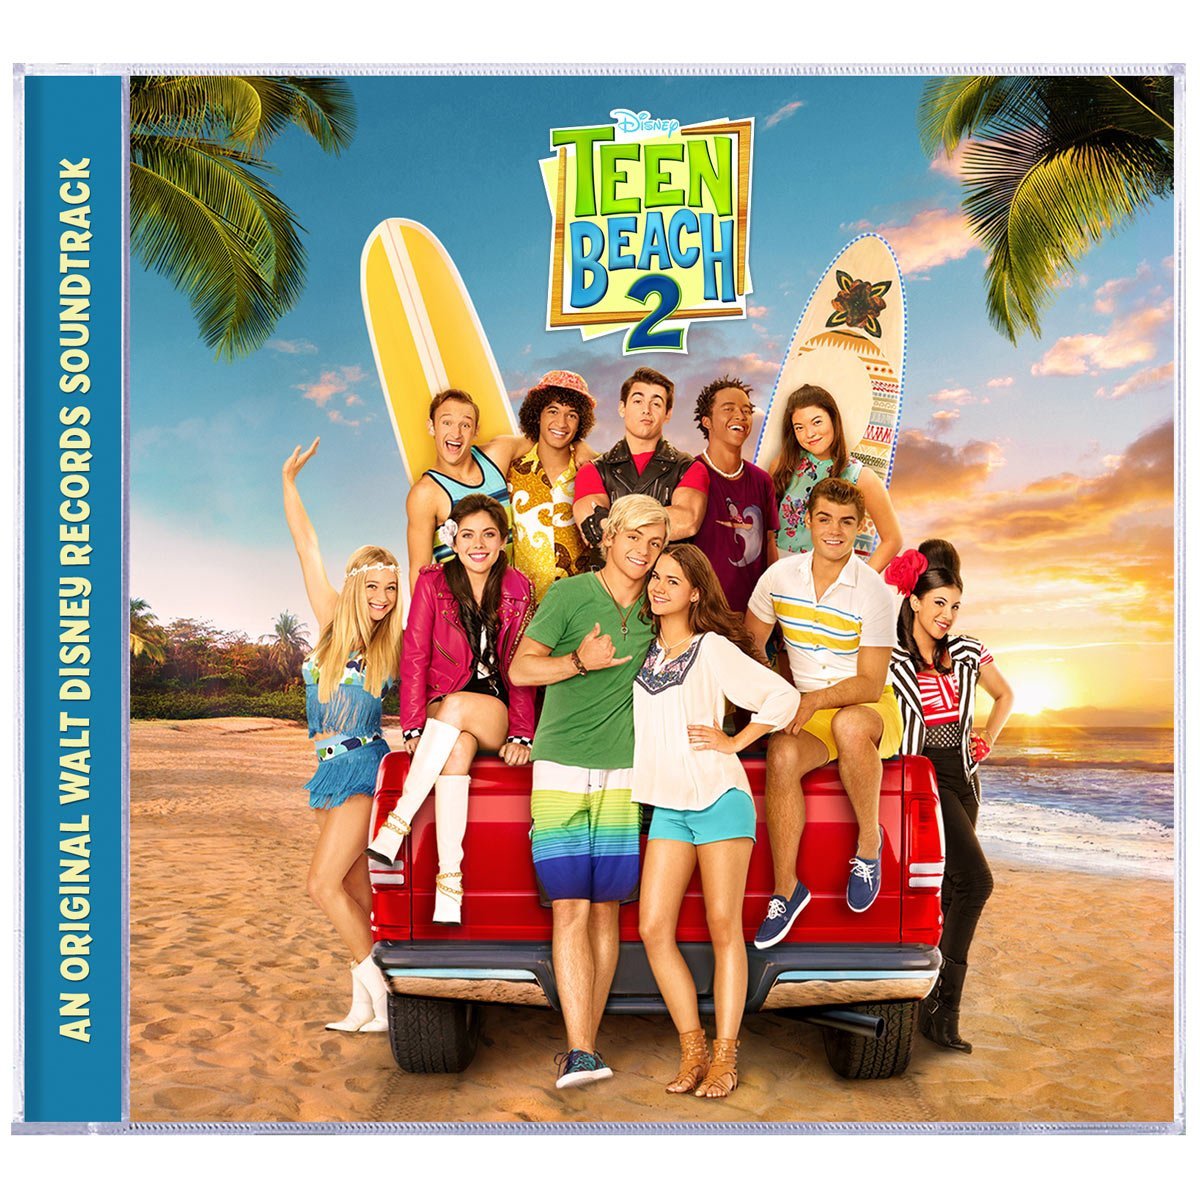 Teen Beach 2 (Soundtrack)